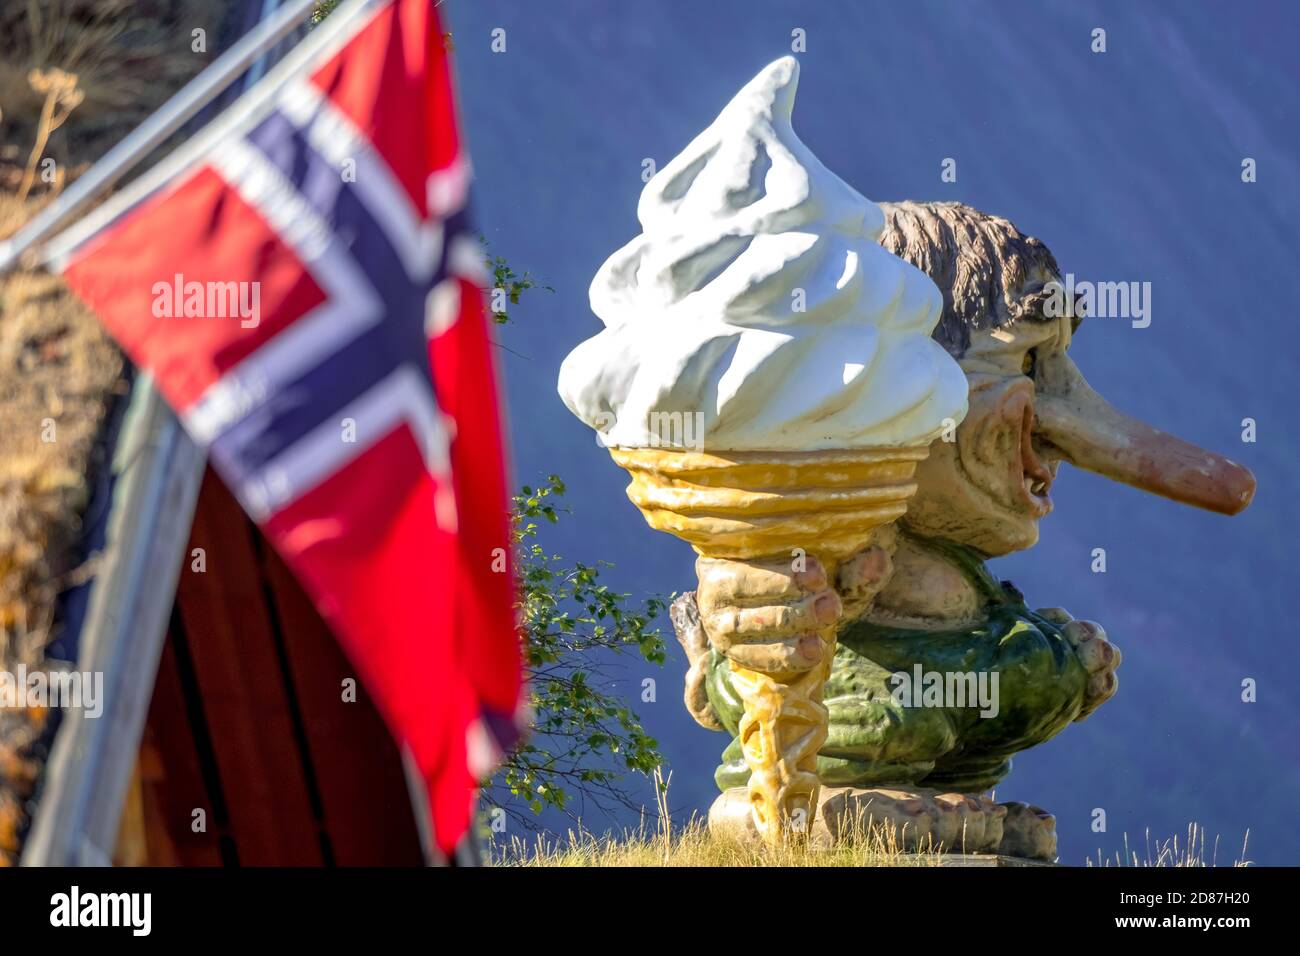 Norwegian troll with foodIce and Norwegian flag, Innfjords, Møre og Romsdal, Norway, Scandinavia, Europe, adventure travel, mountain ghost, mythical c Stock Photo